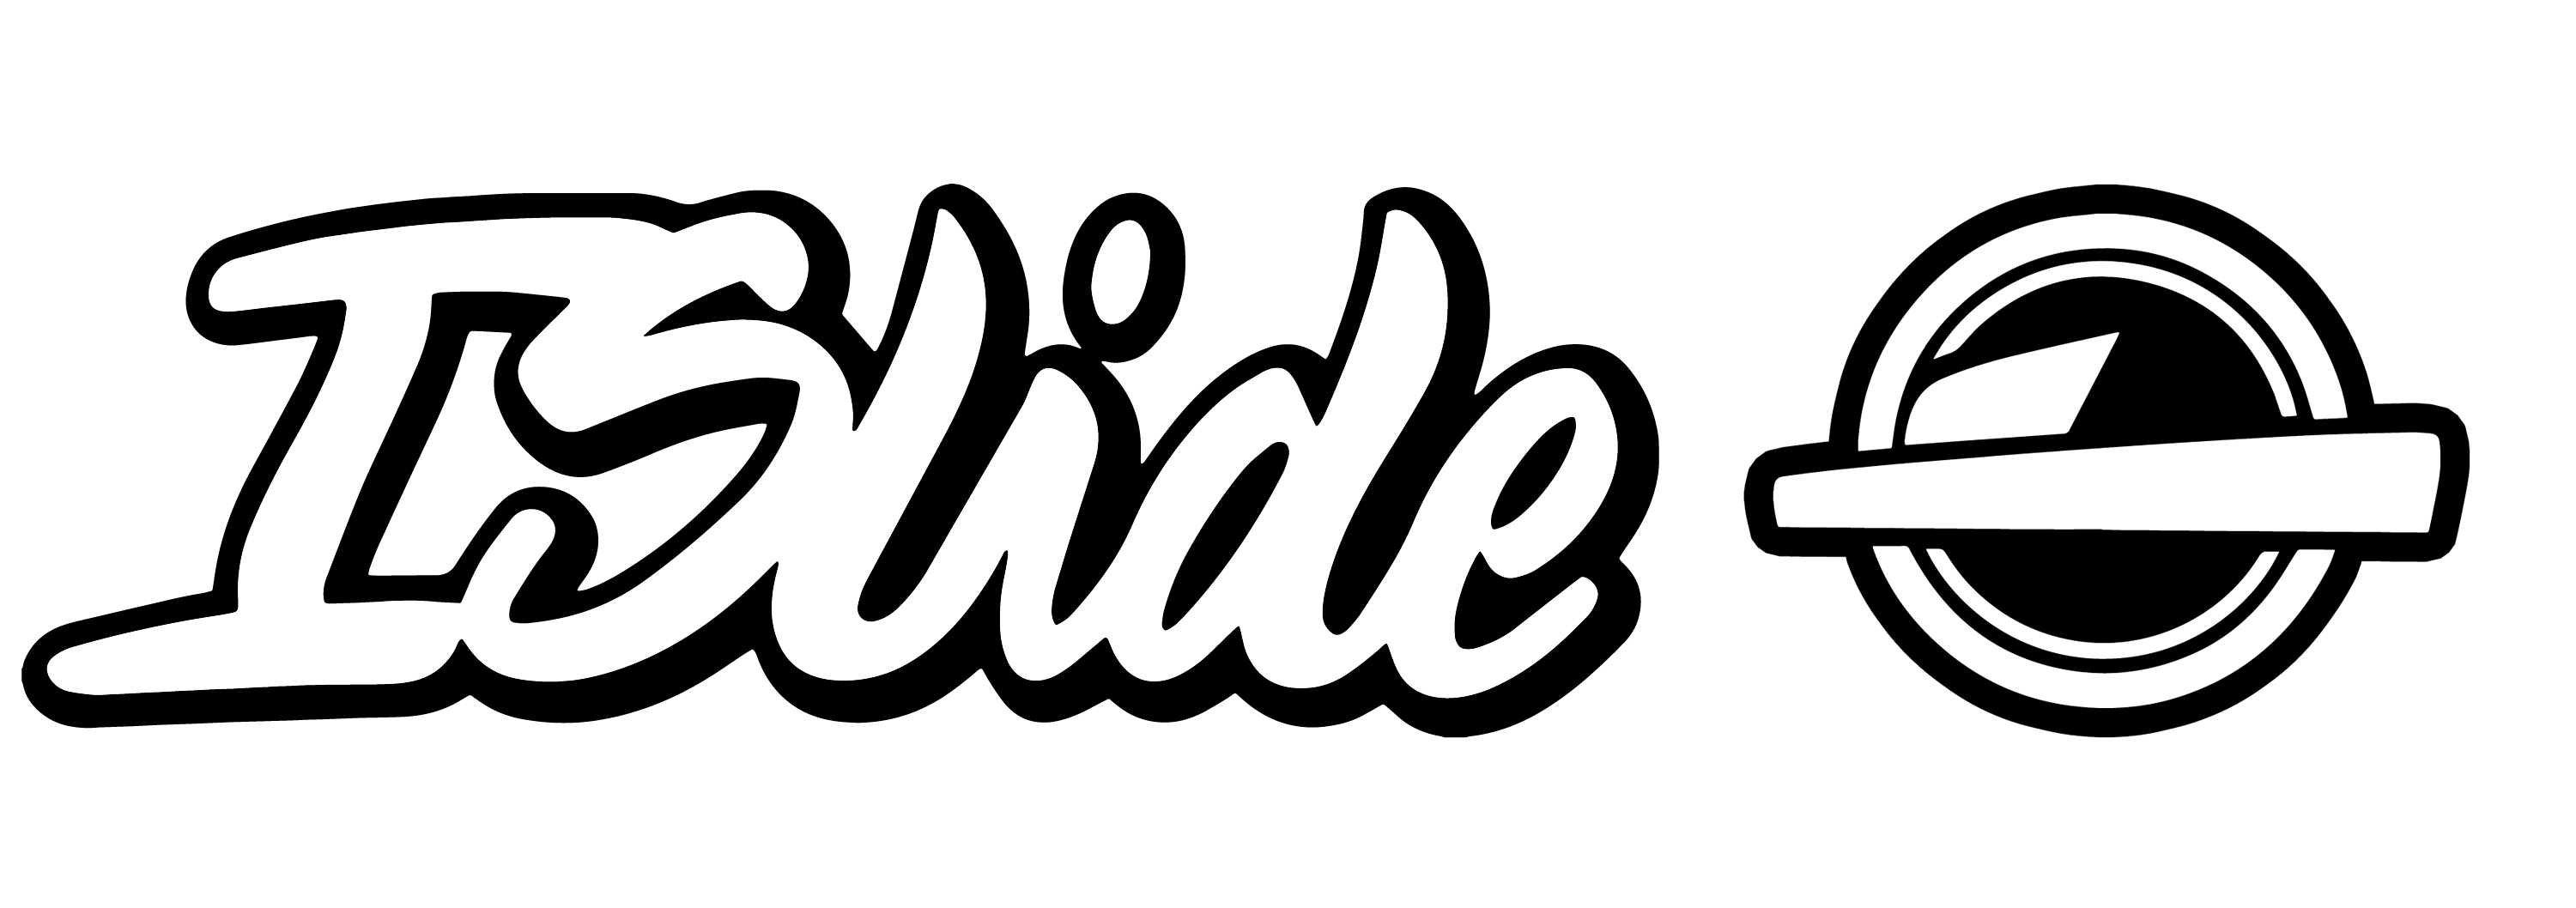 ISlide logo blk background